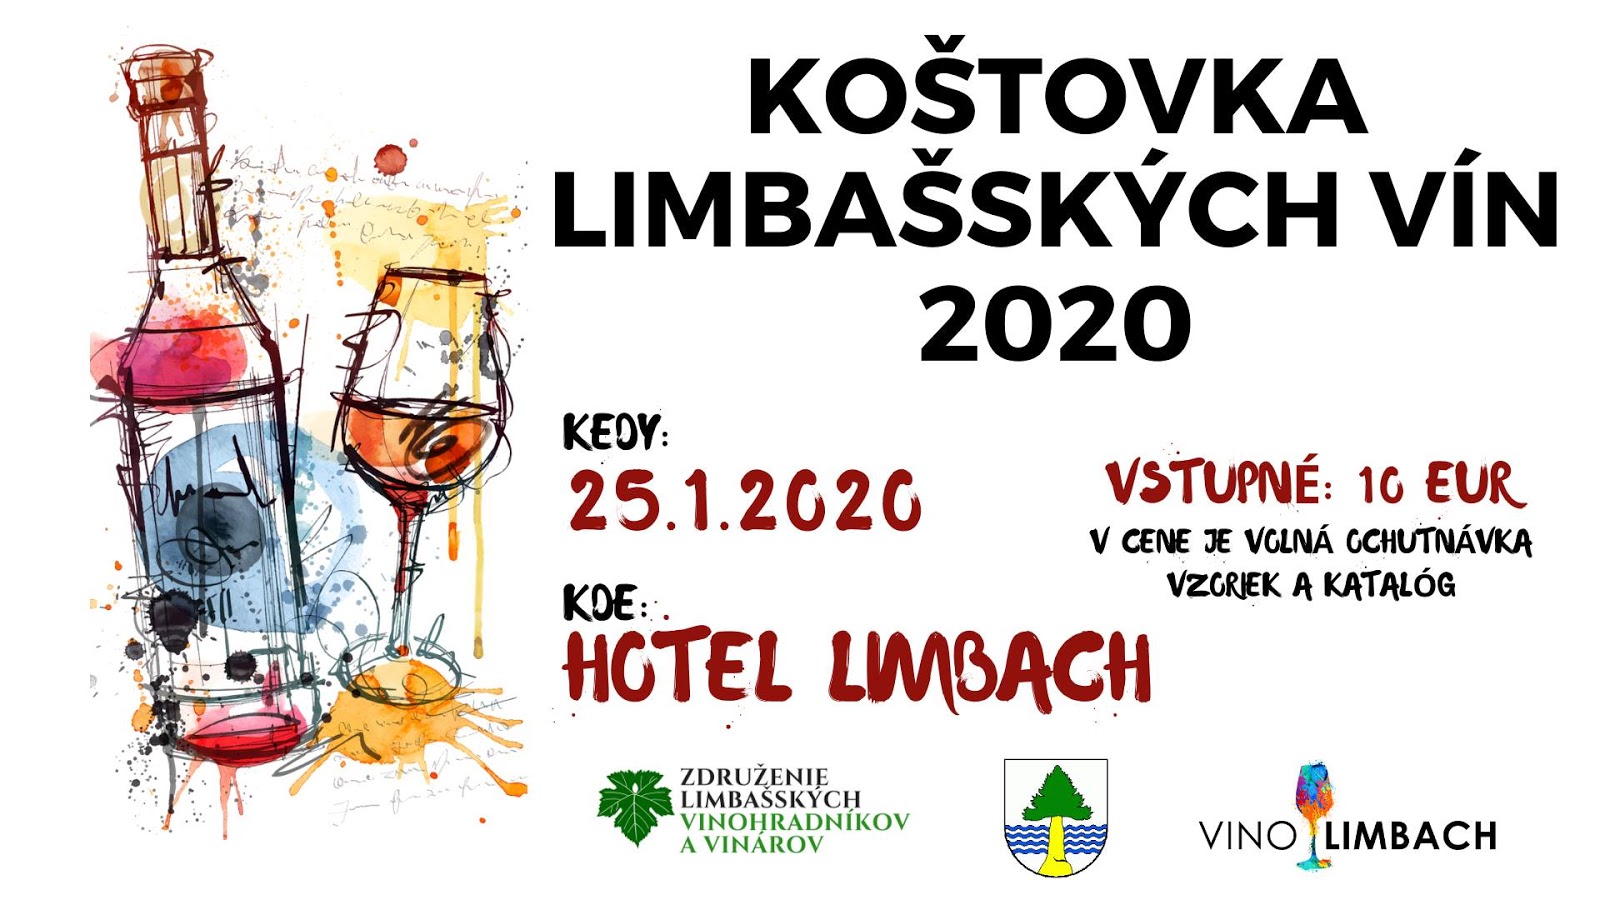 Kotovka limbaskch vn a vn host 2020 - 14. ronk